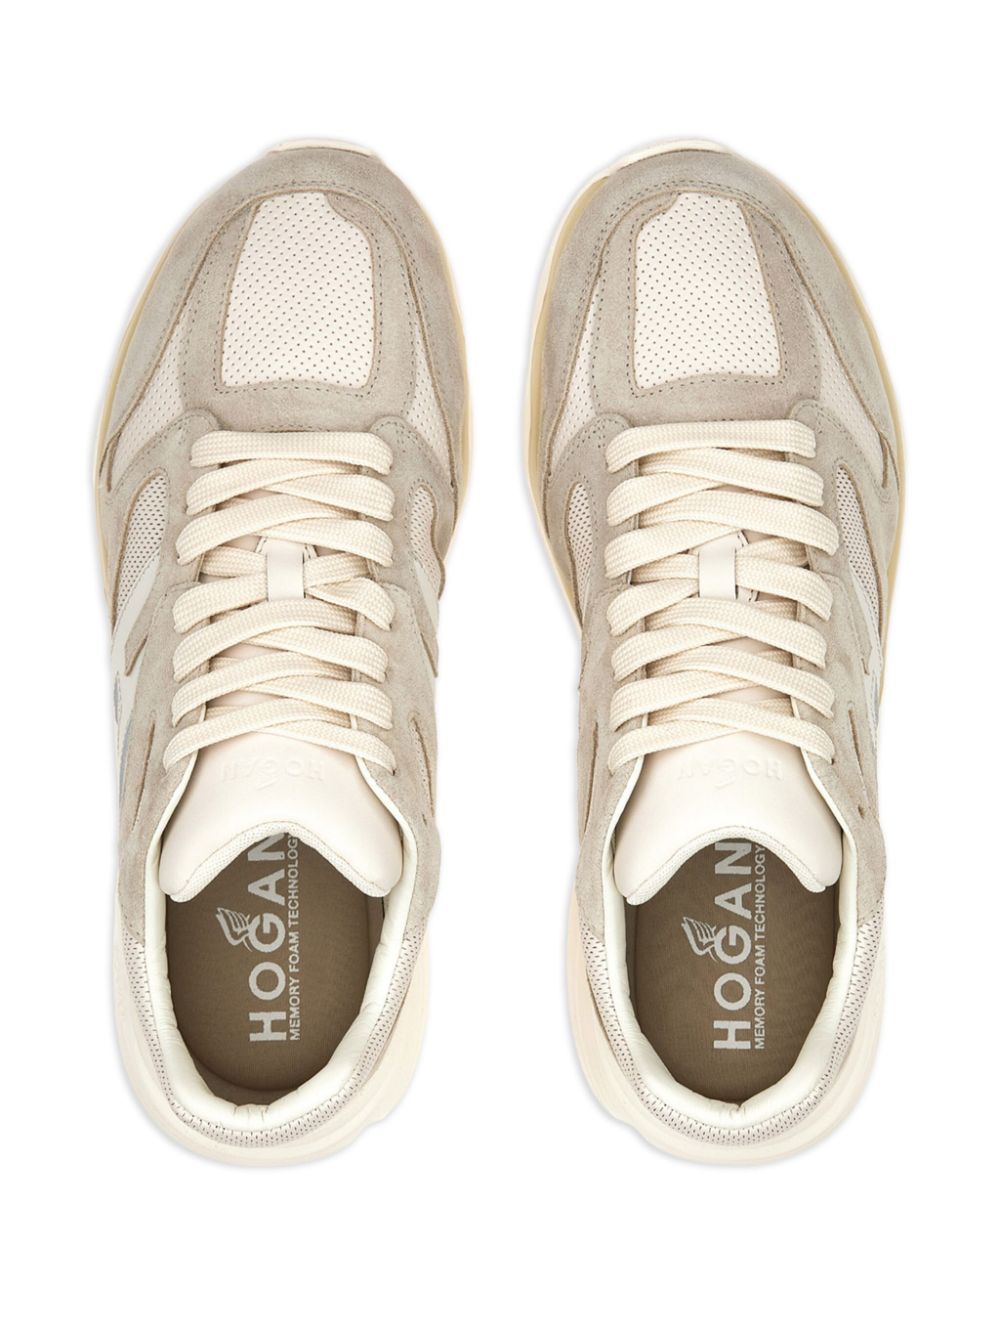 'H665' sneakers